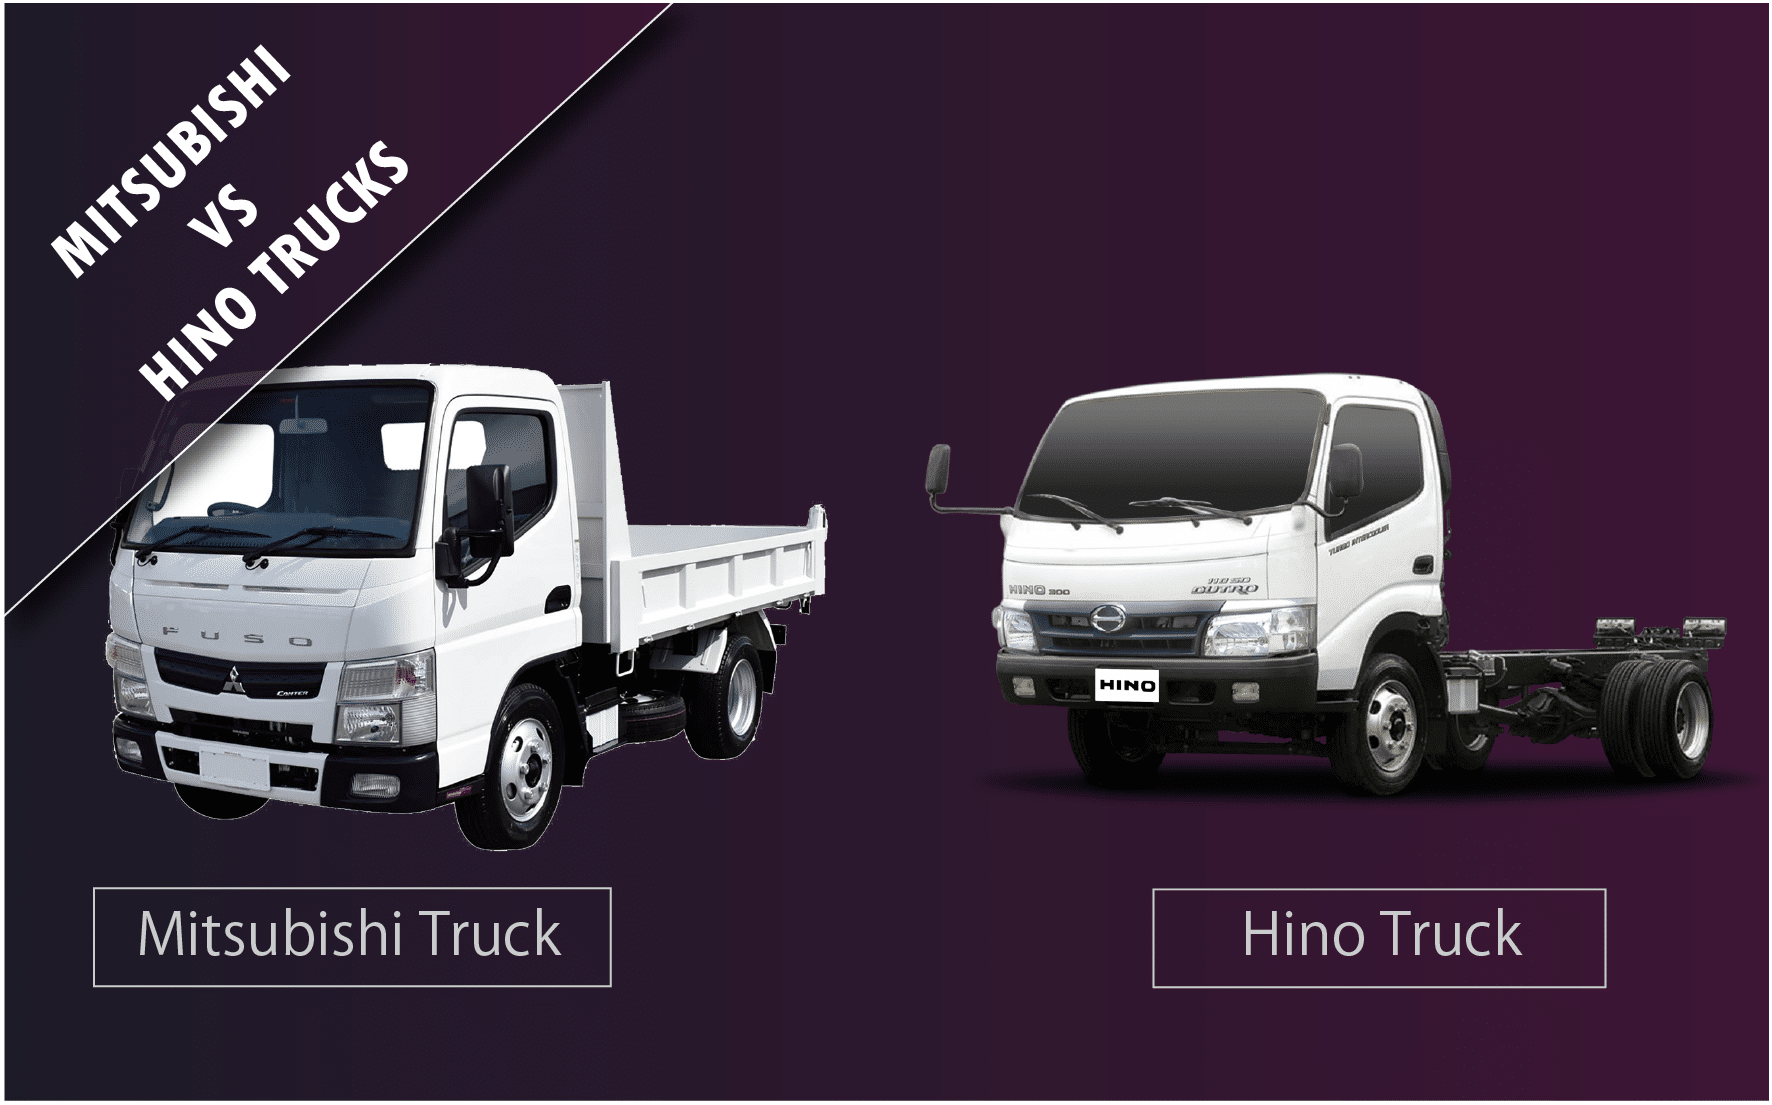 Mitsubishi vs Hino Trucks